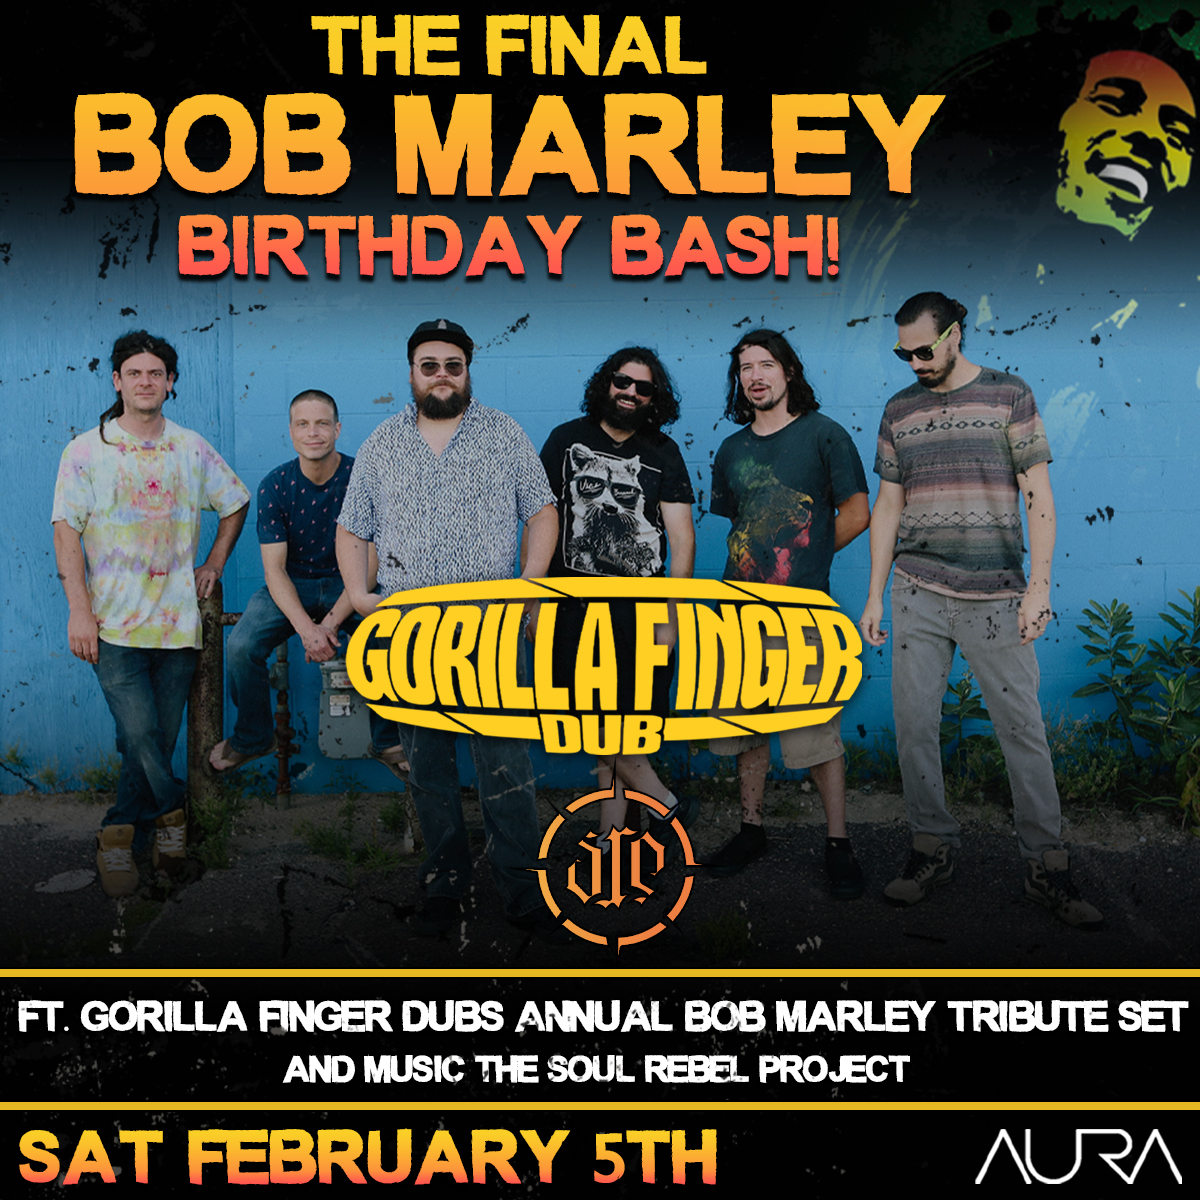 Bob Marley Birthday Bash with Gorilla Finger Dub and The Soul Rebel